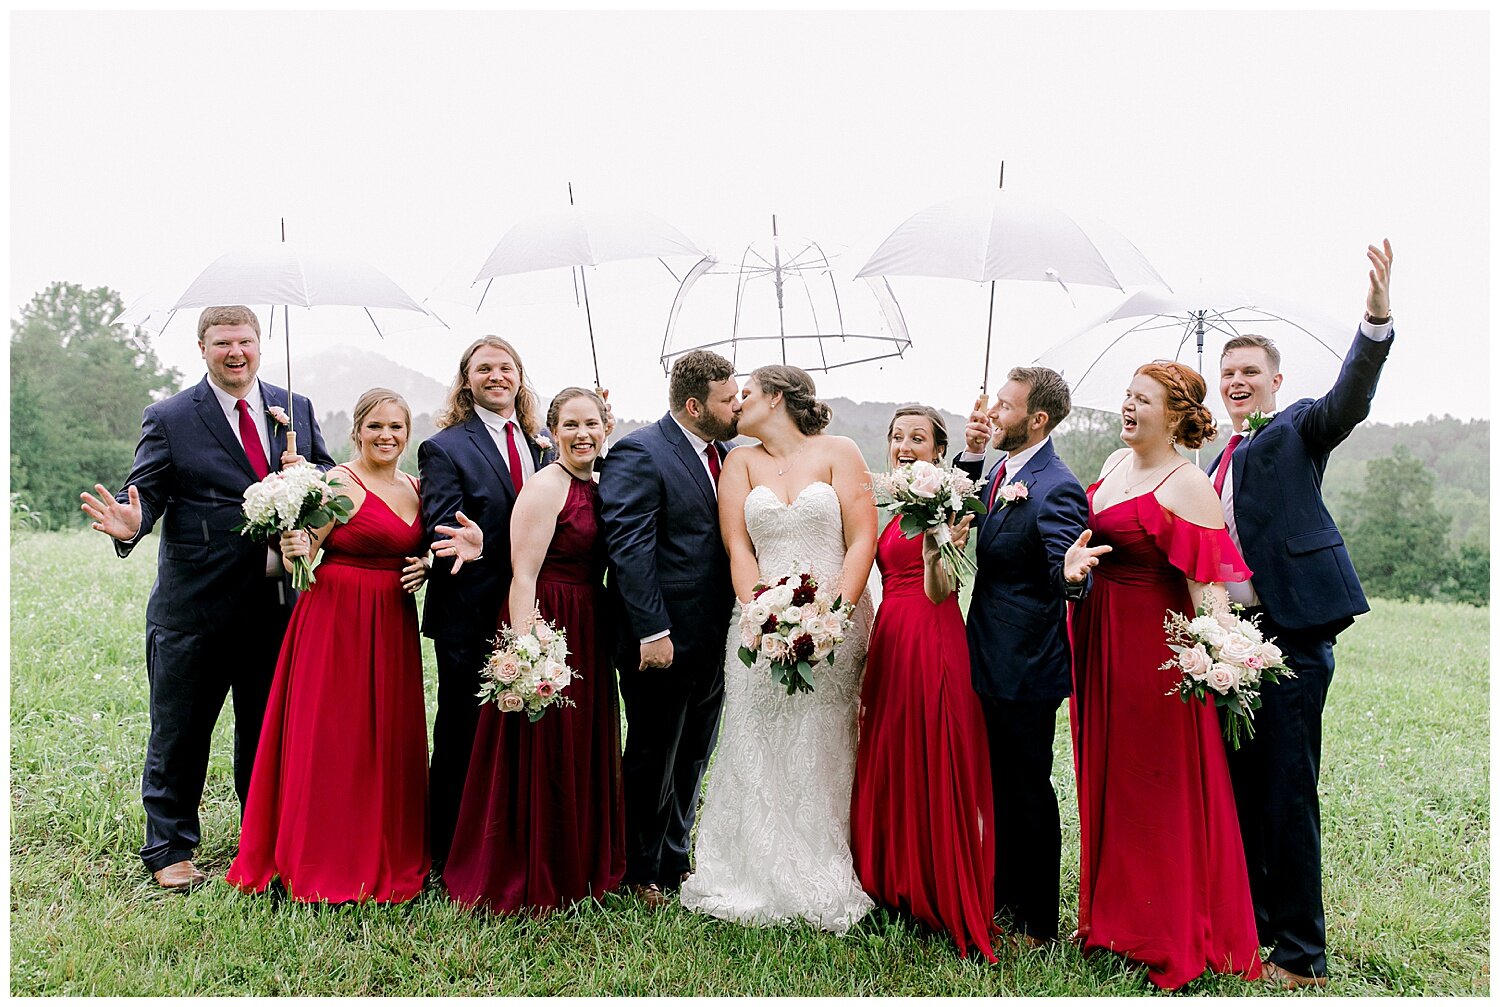 MJ Mendoza Photography | Richmond VA Wedding Photographer